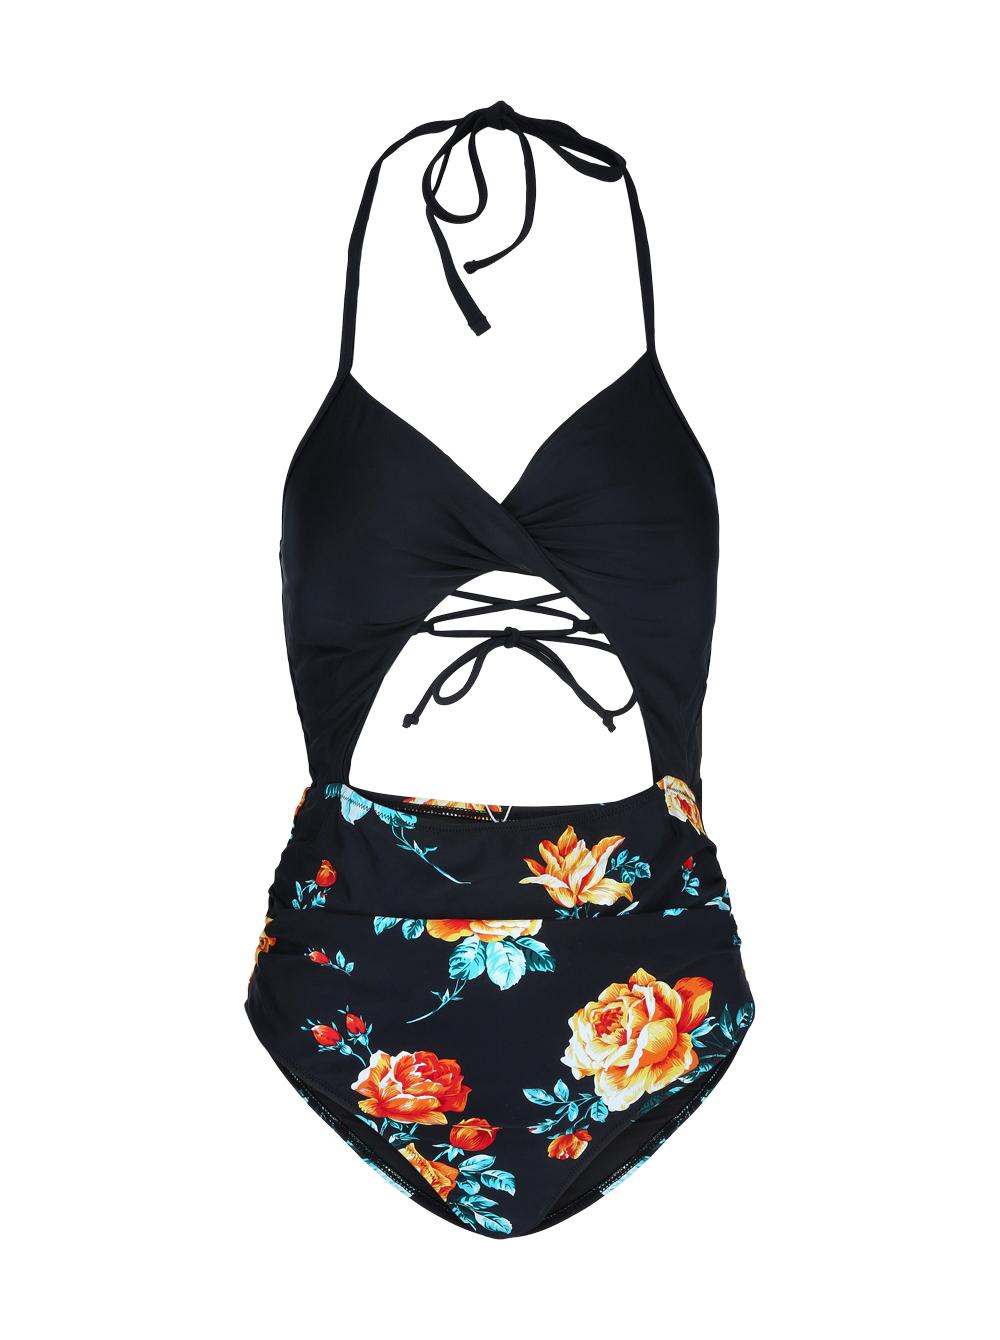 Selected image for CUPSHE Ženski jednodelni kupaći kostim J34 crno-cvetni